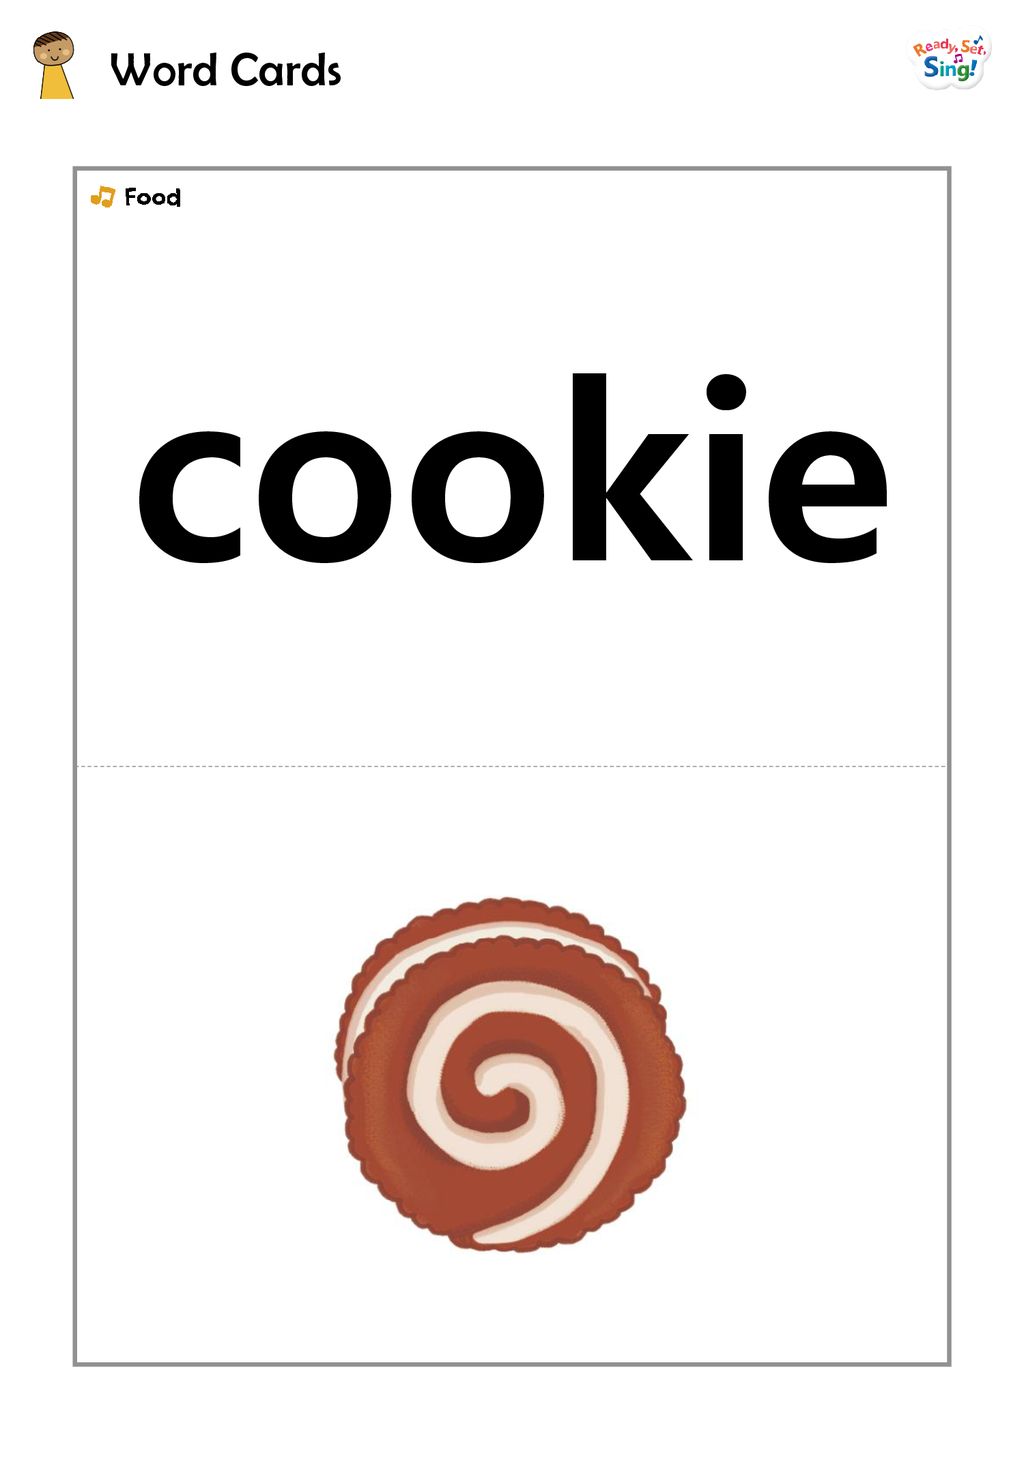 Word Cards cookie